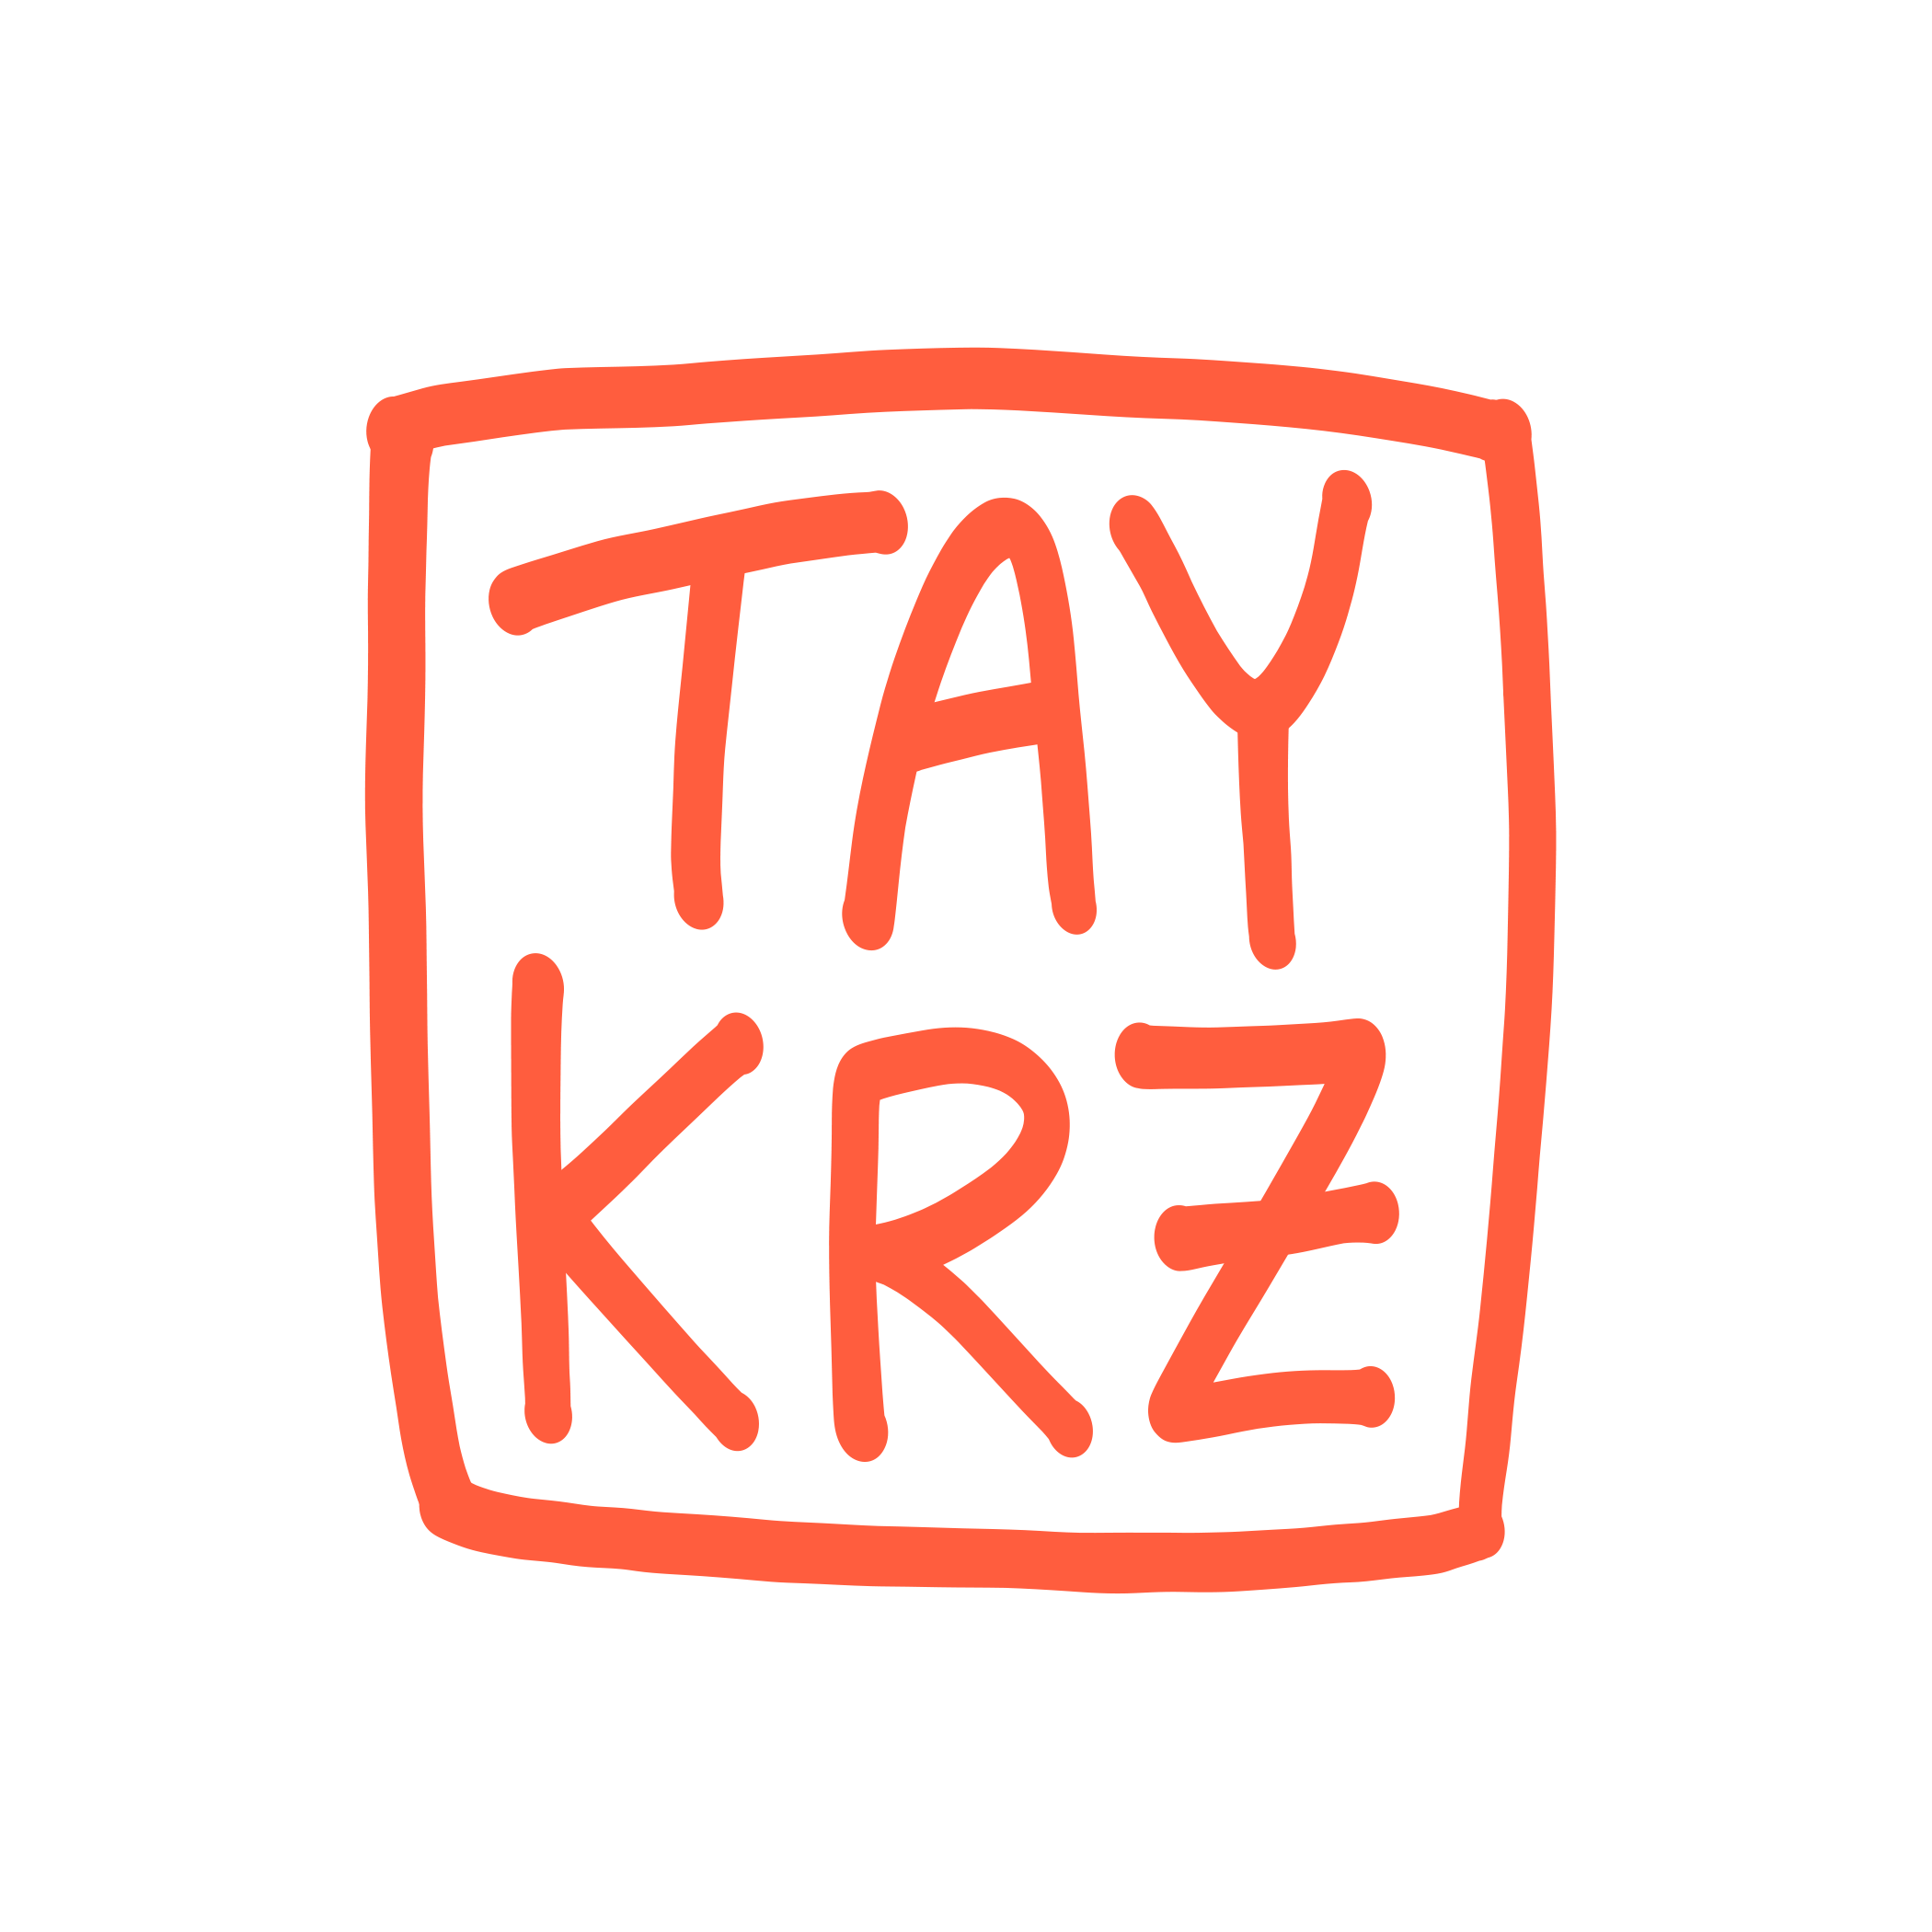 Taylor Krz